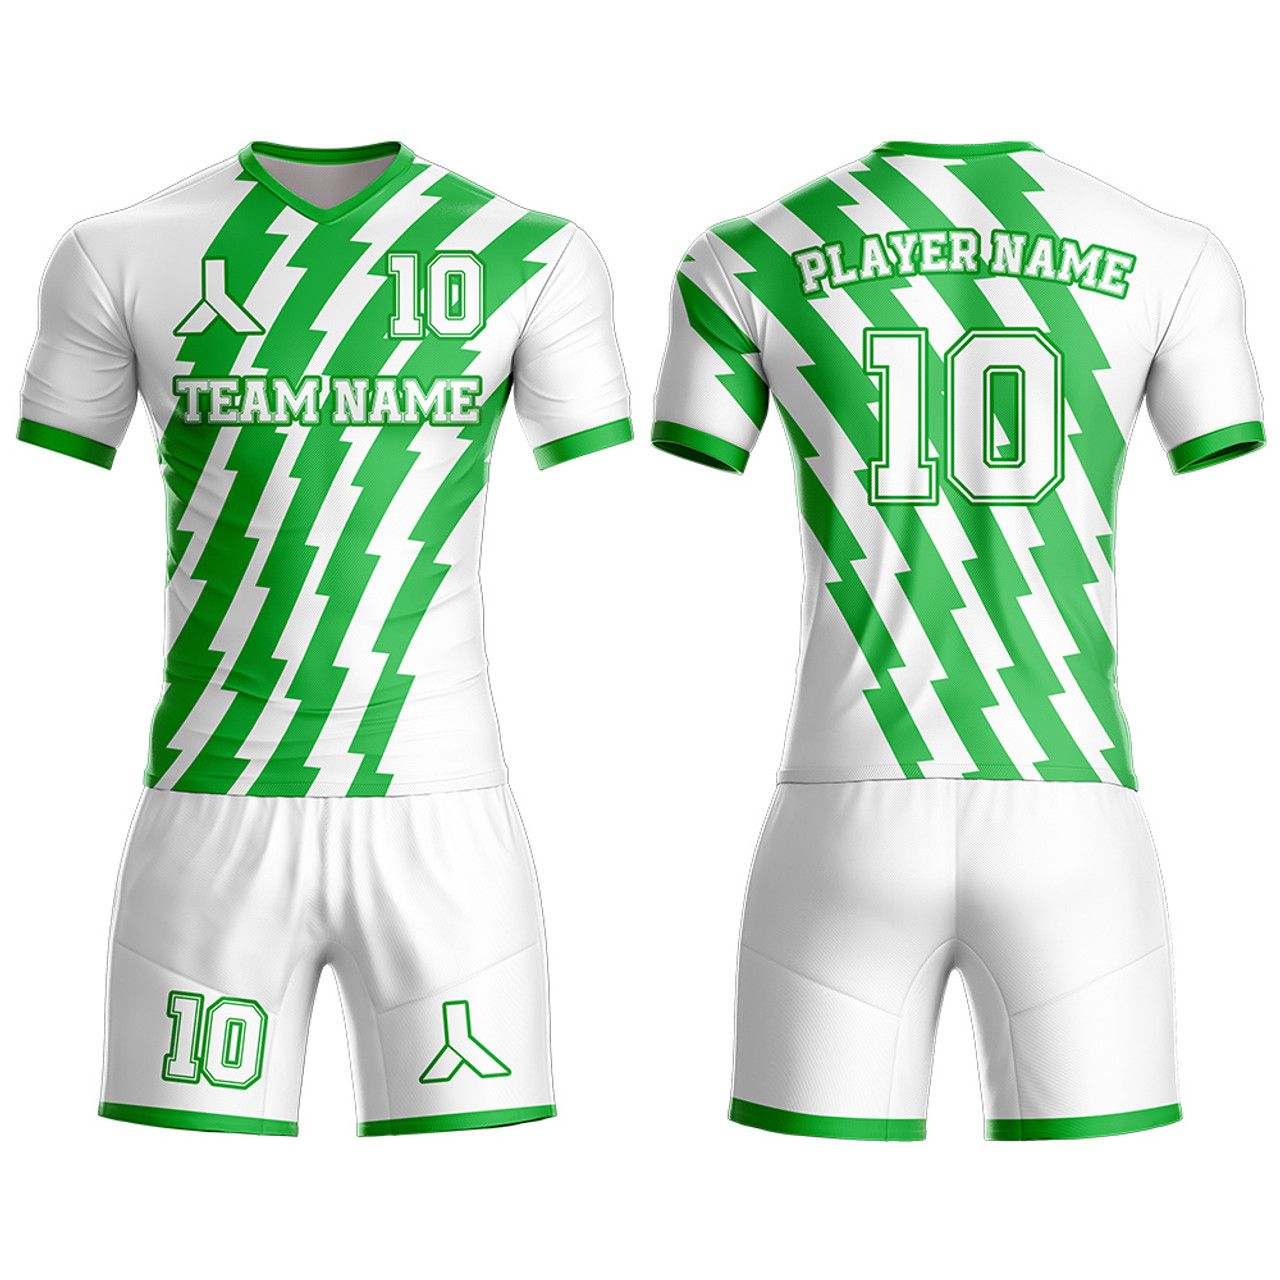 Custom Grass Green White Sublimation Soccer Uniform Jersey